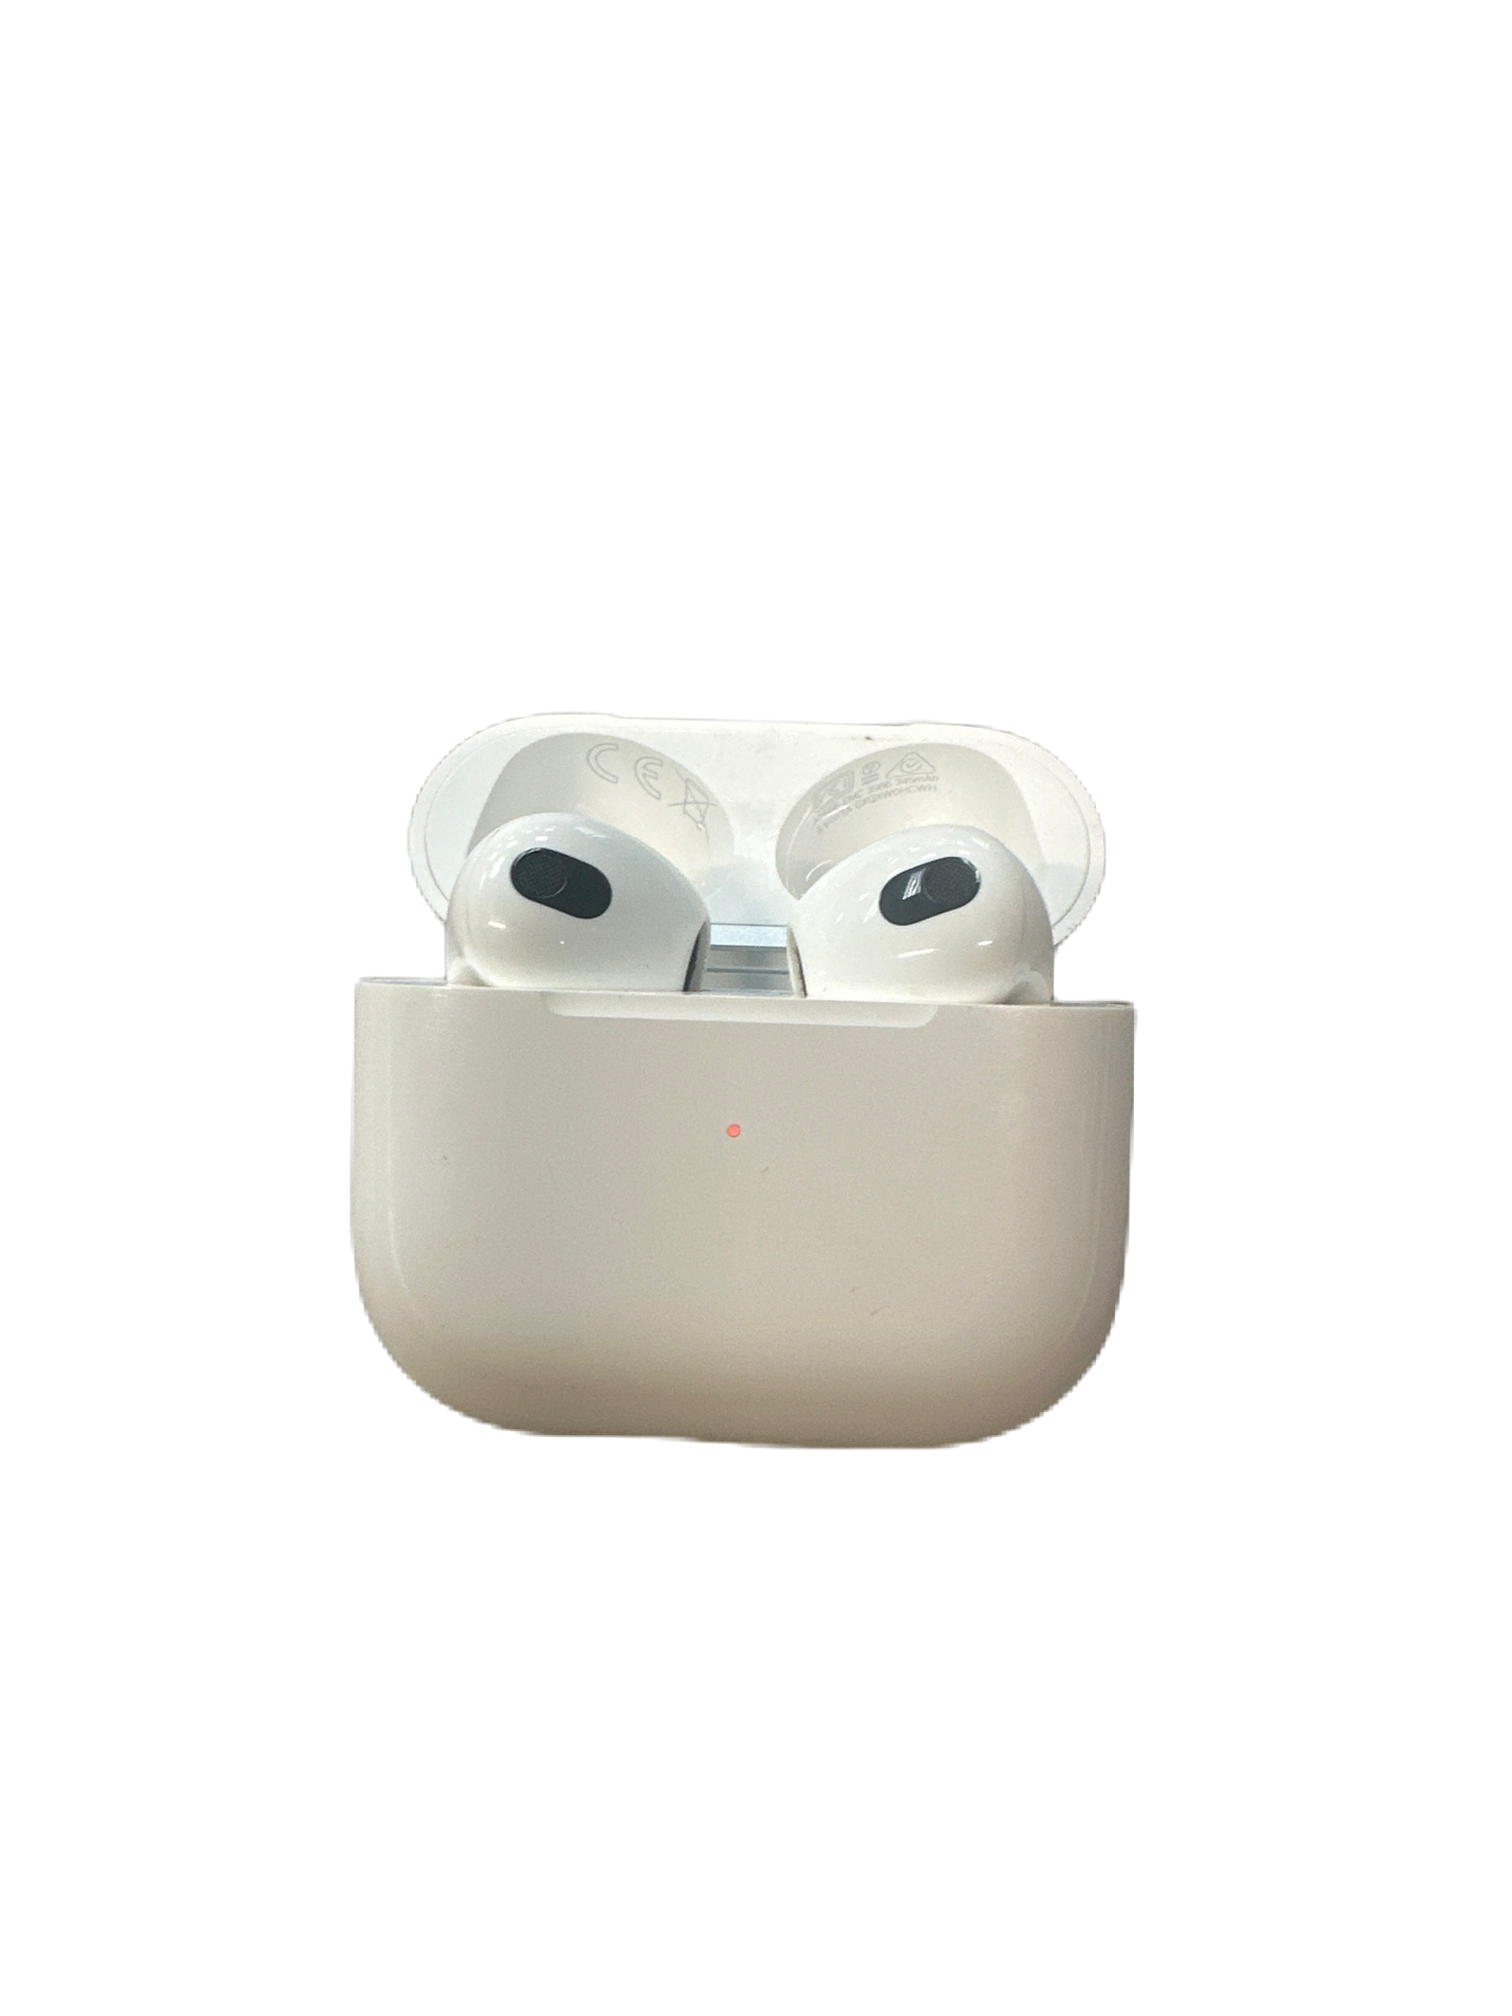 Apple Airpods Gen 3 - Unboxed - B